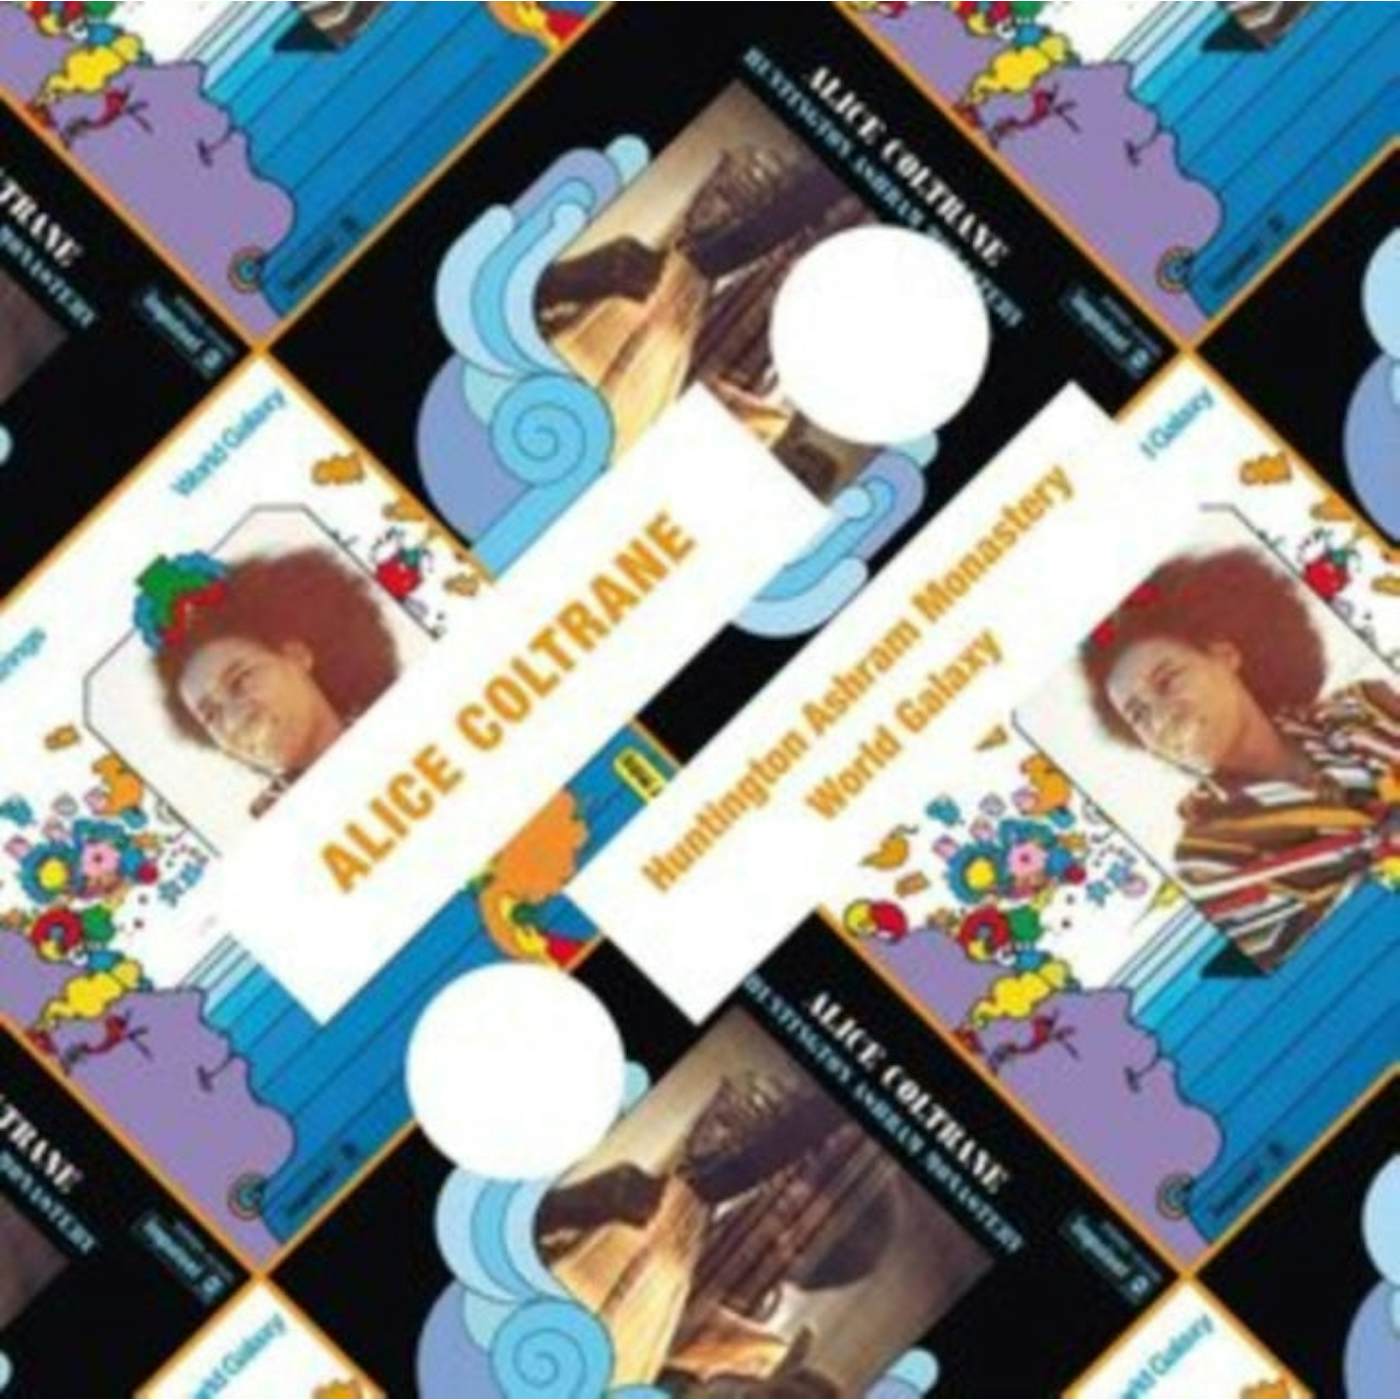 Alice Coltrane CD - Huntington Ashram Monastery/World Galaxy